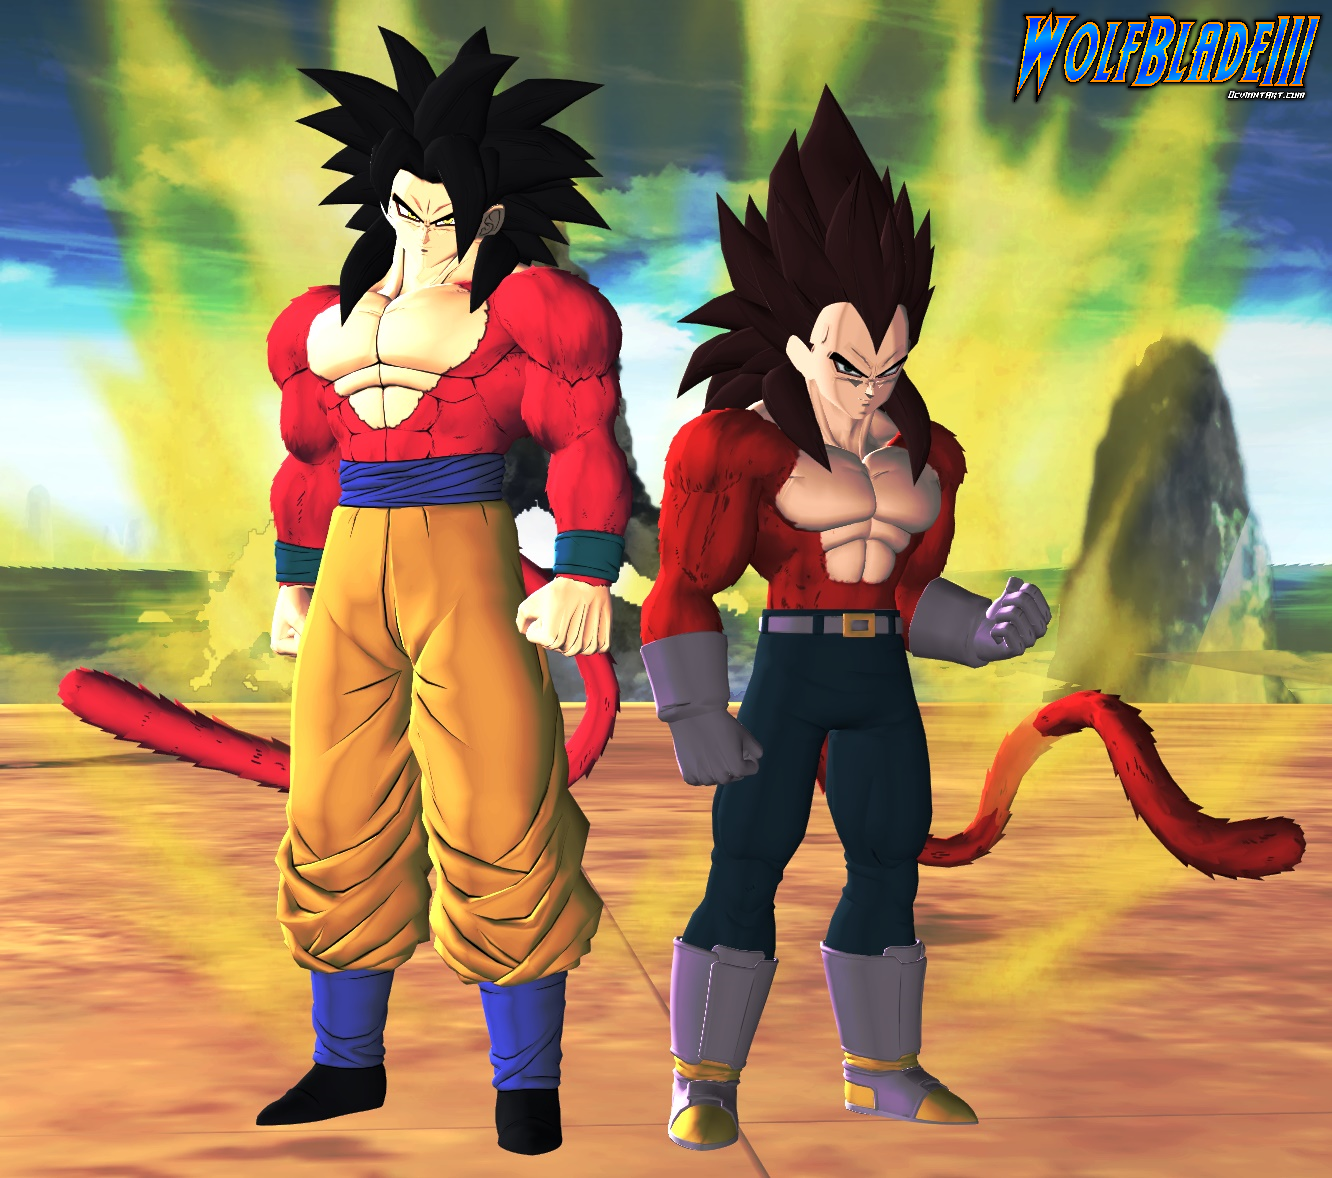 Super Saiyan 4 Goku and Vegeta. by WOLFBLADE111 on DeviantArt